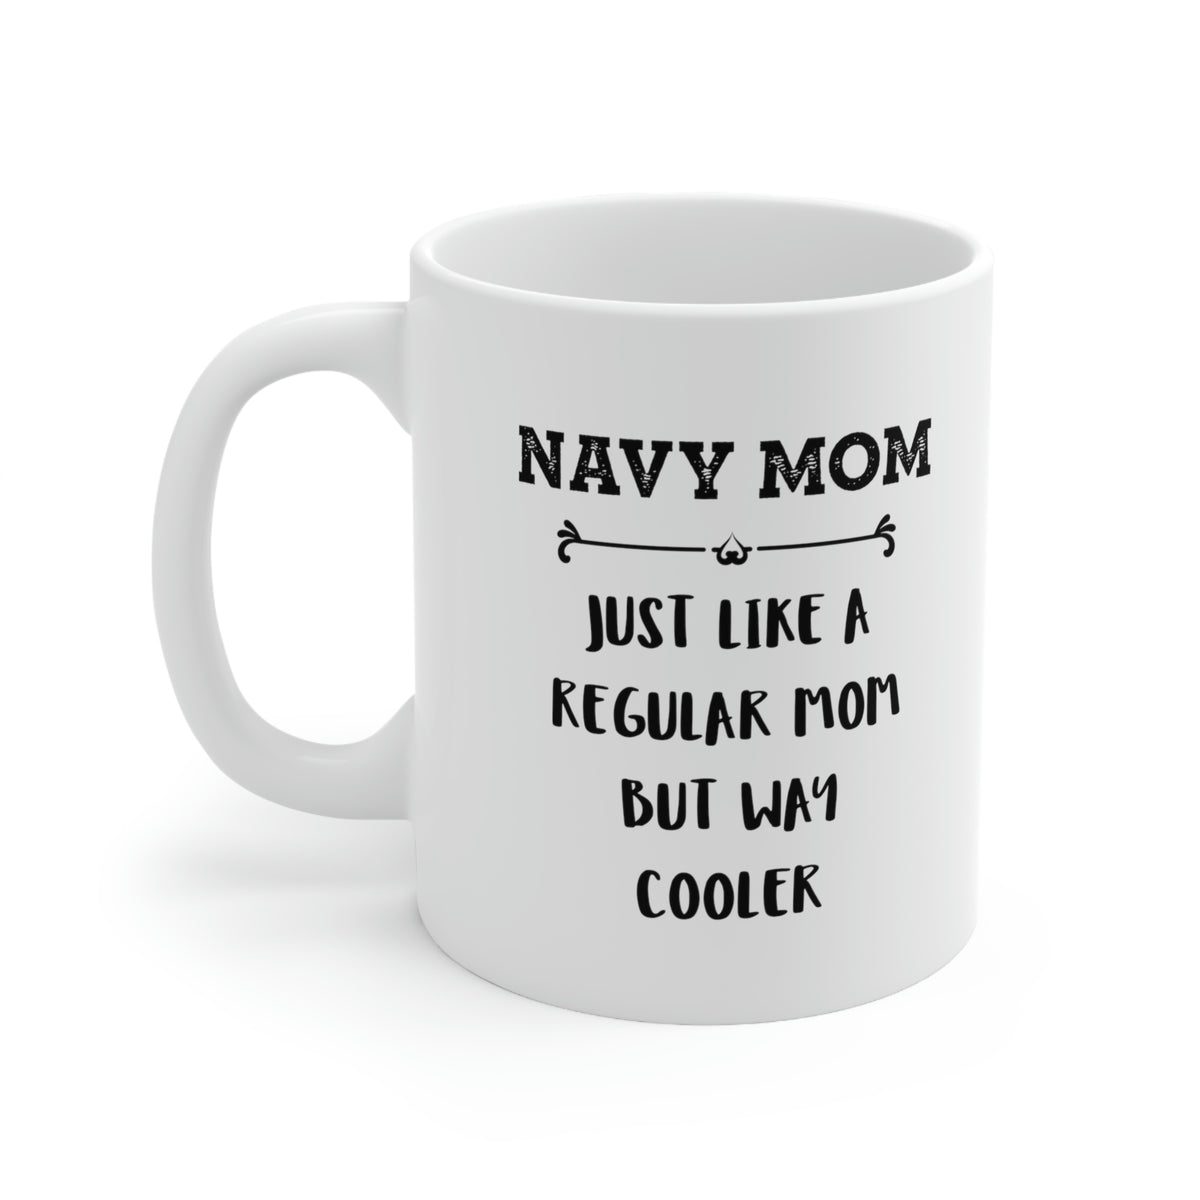 Navy Mom Gifts - Navy Mom. Just Like A Regular Mom But Way Cooler - Navy Mom White Coffee Mug, Tea Cup